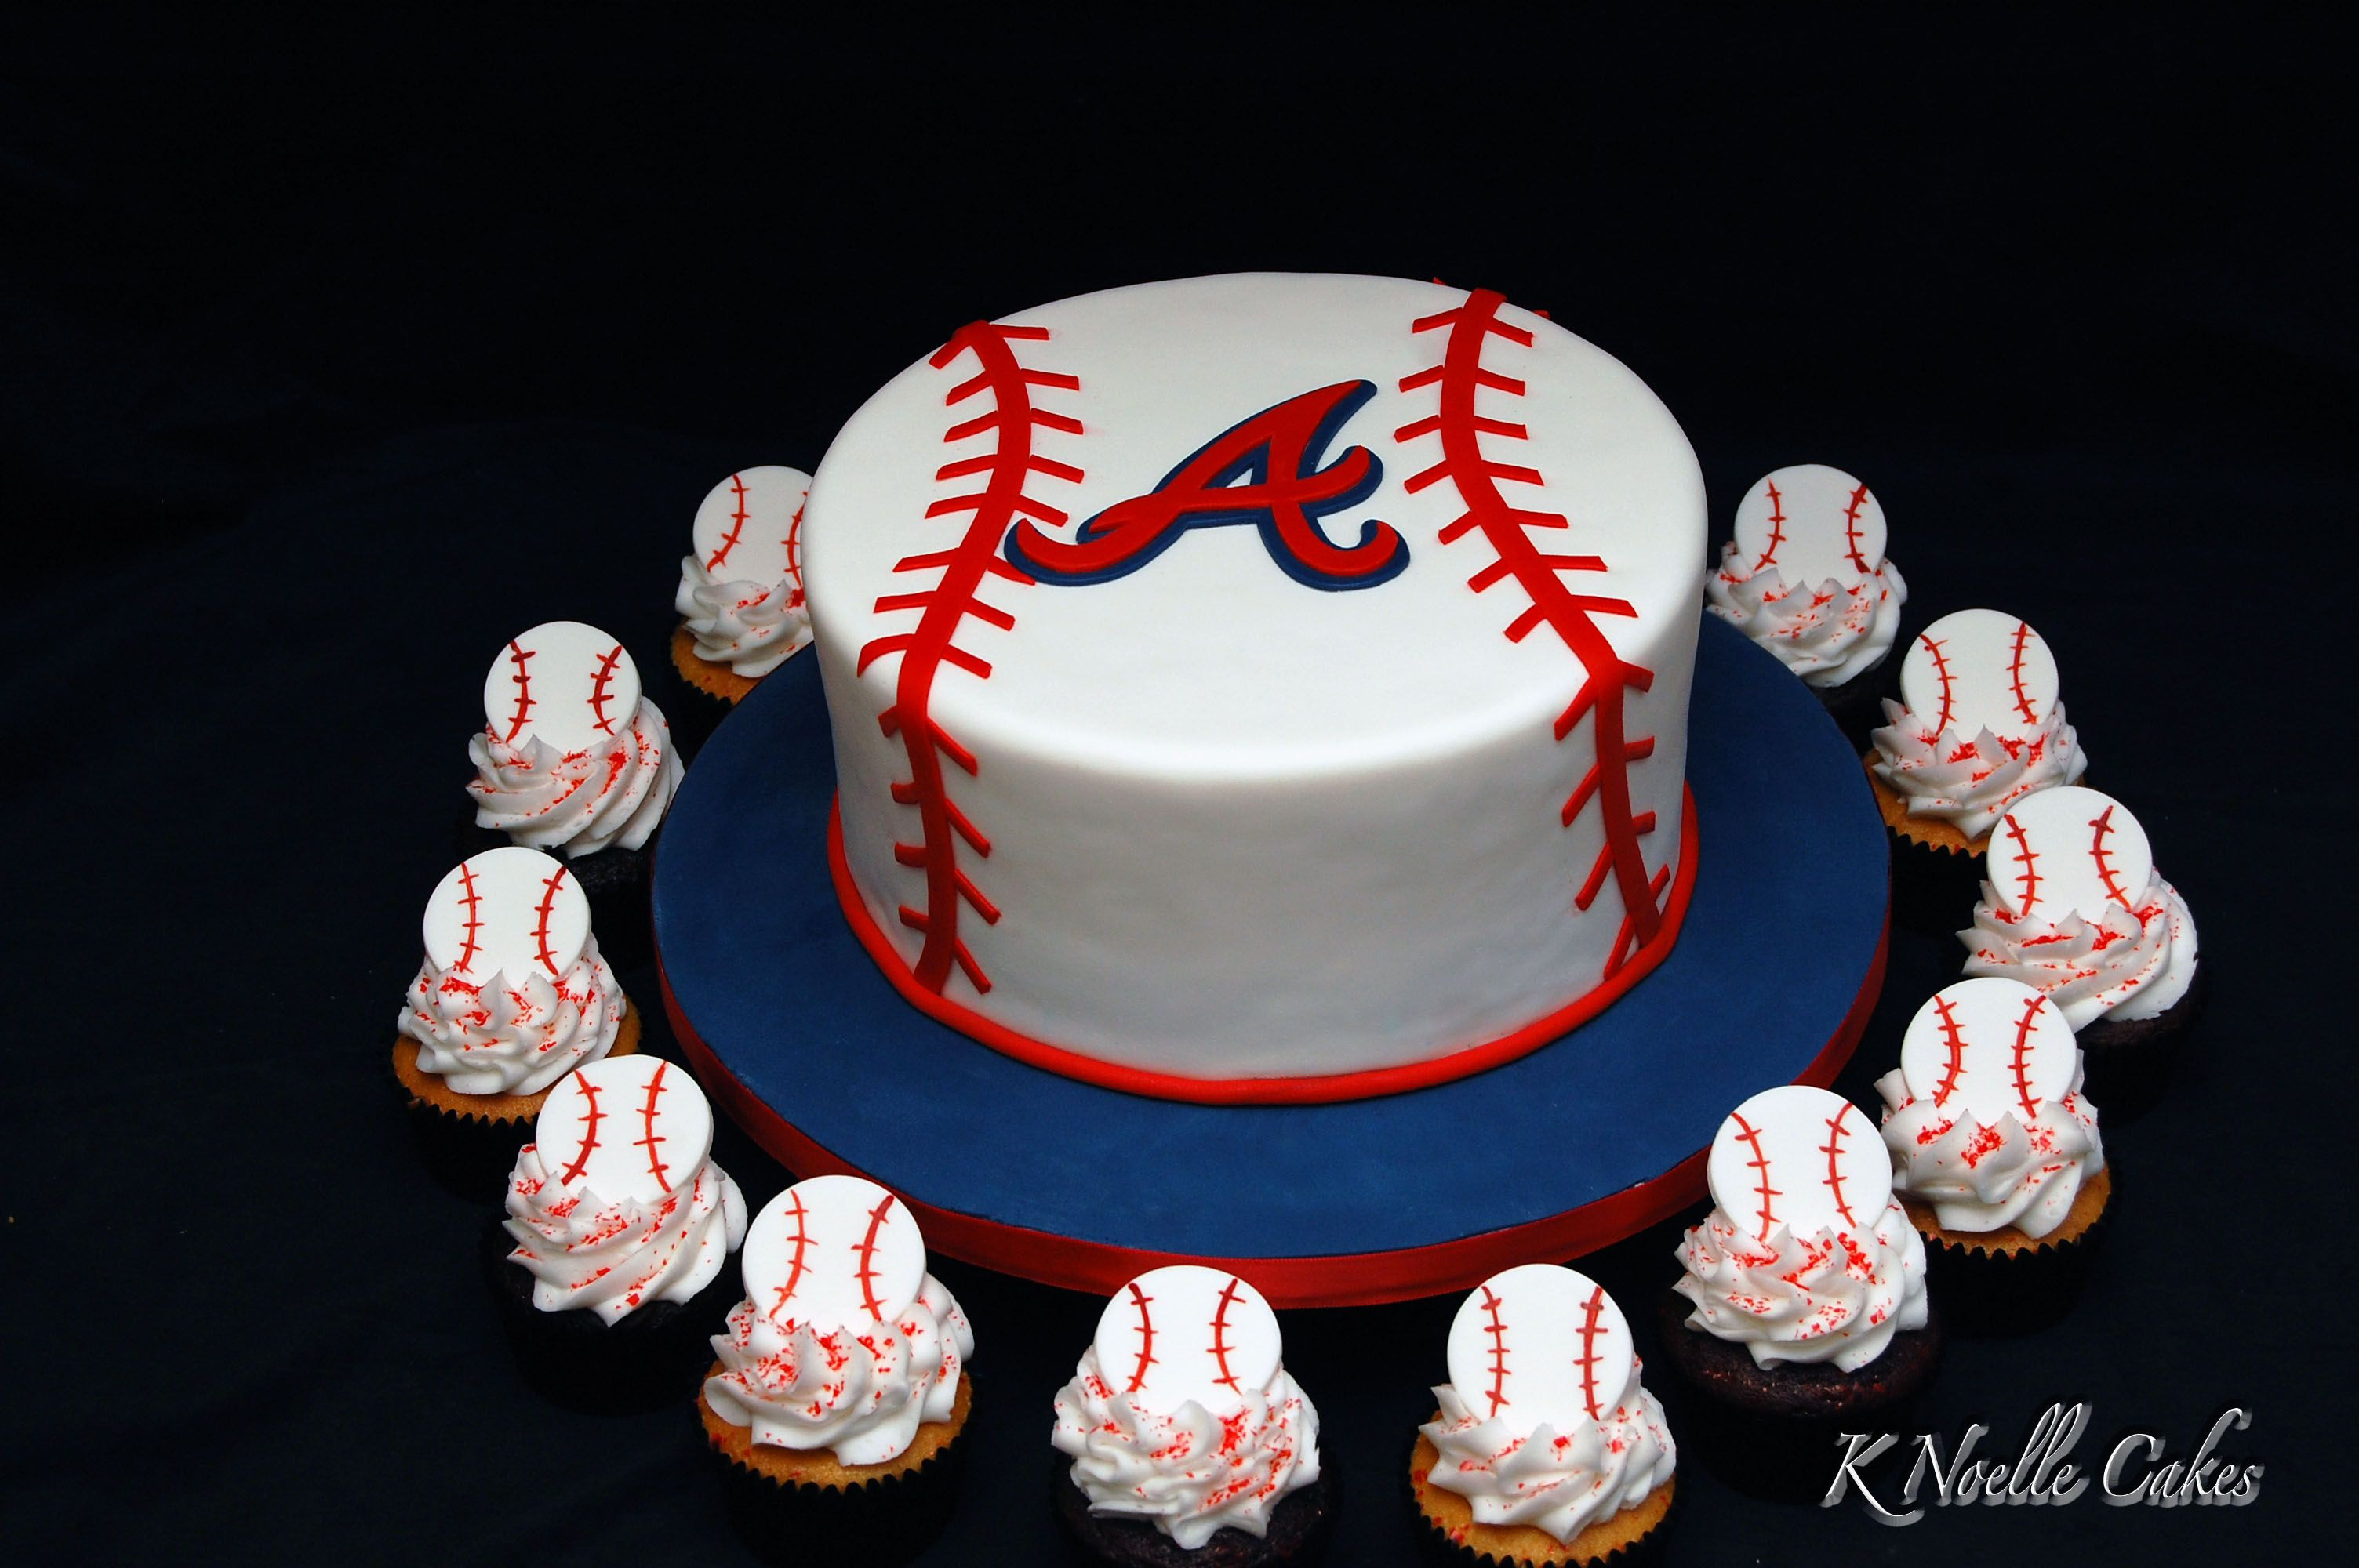 Birthday Party Ideas Atlanta
 Atlanta Braves theme cake with cupcakes